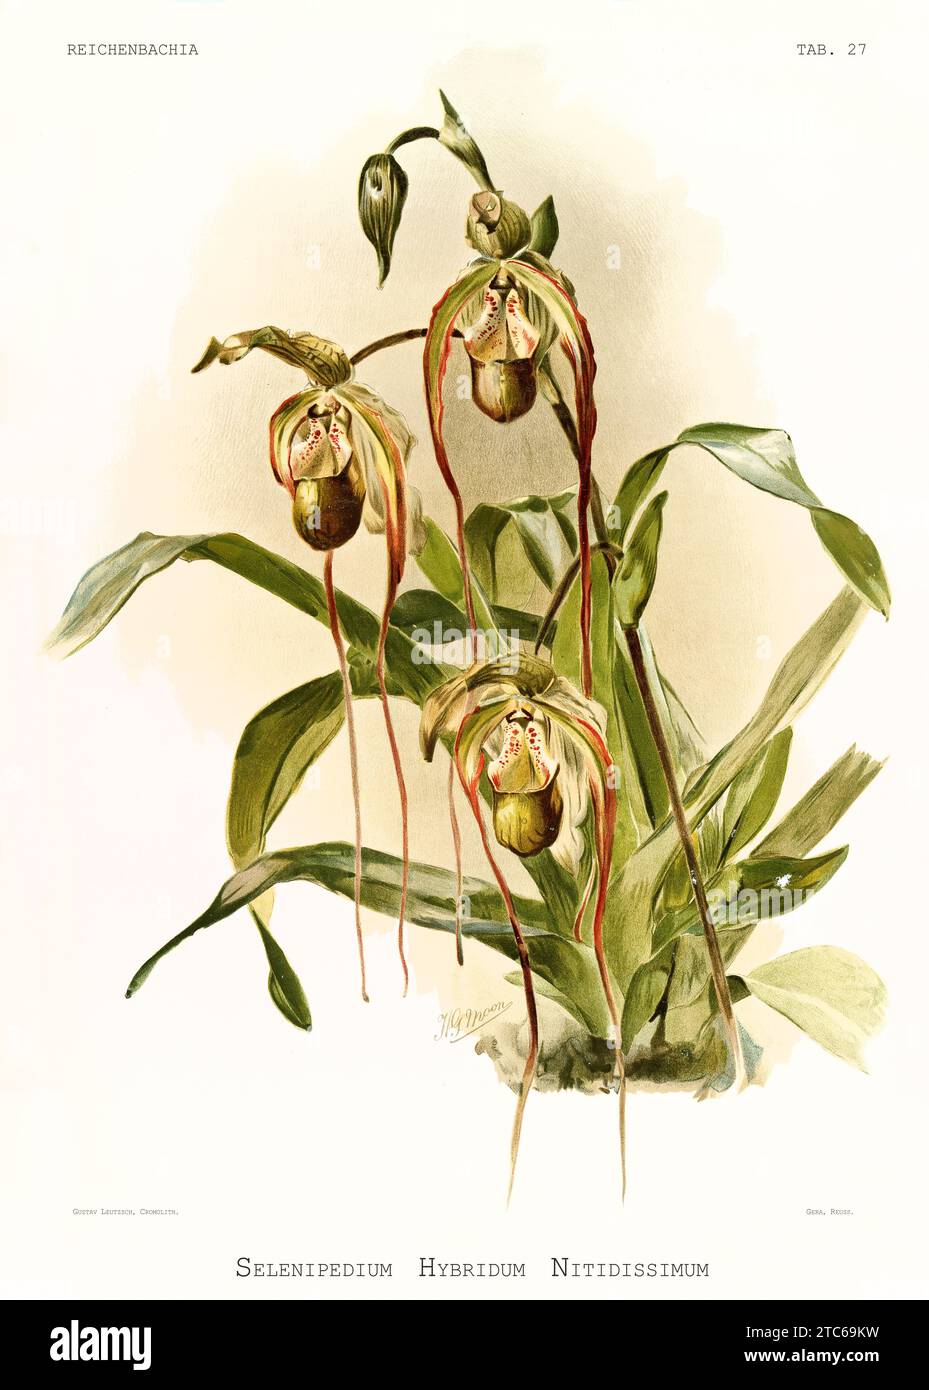 Old illustration of Cypripedium x nitidissimus. Reichenbachia, by F. Sander. St. Albans, UK, 1888 - 1894 Stock Photo